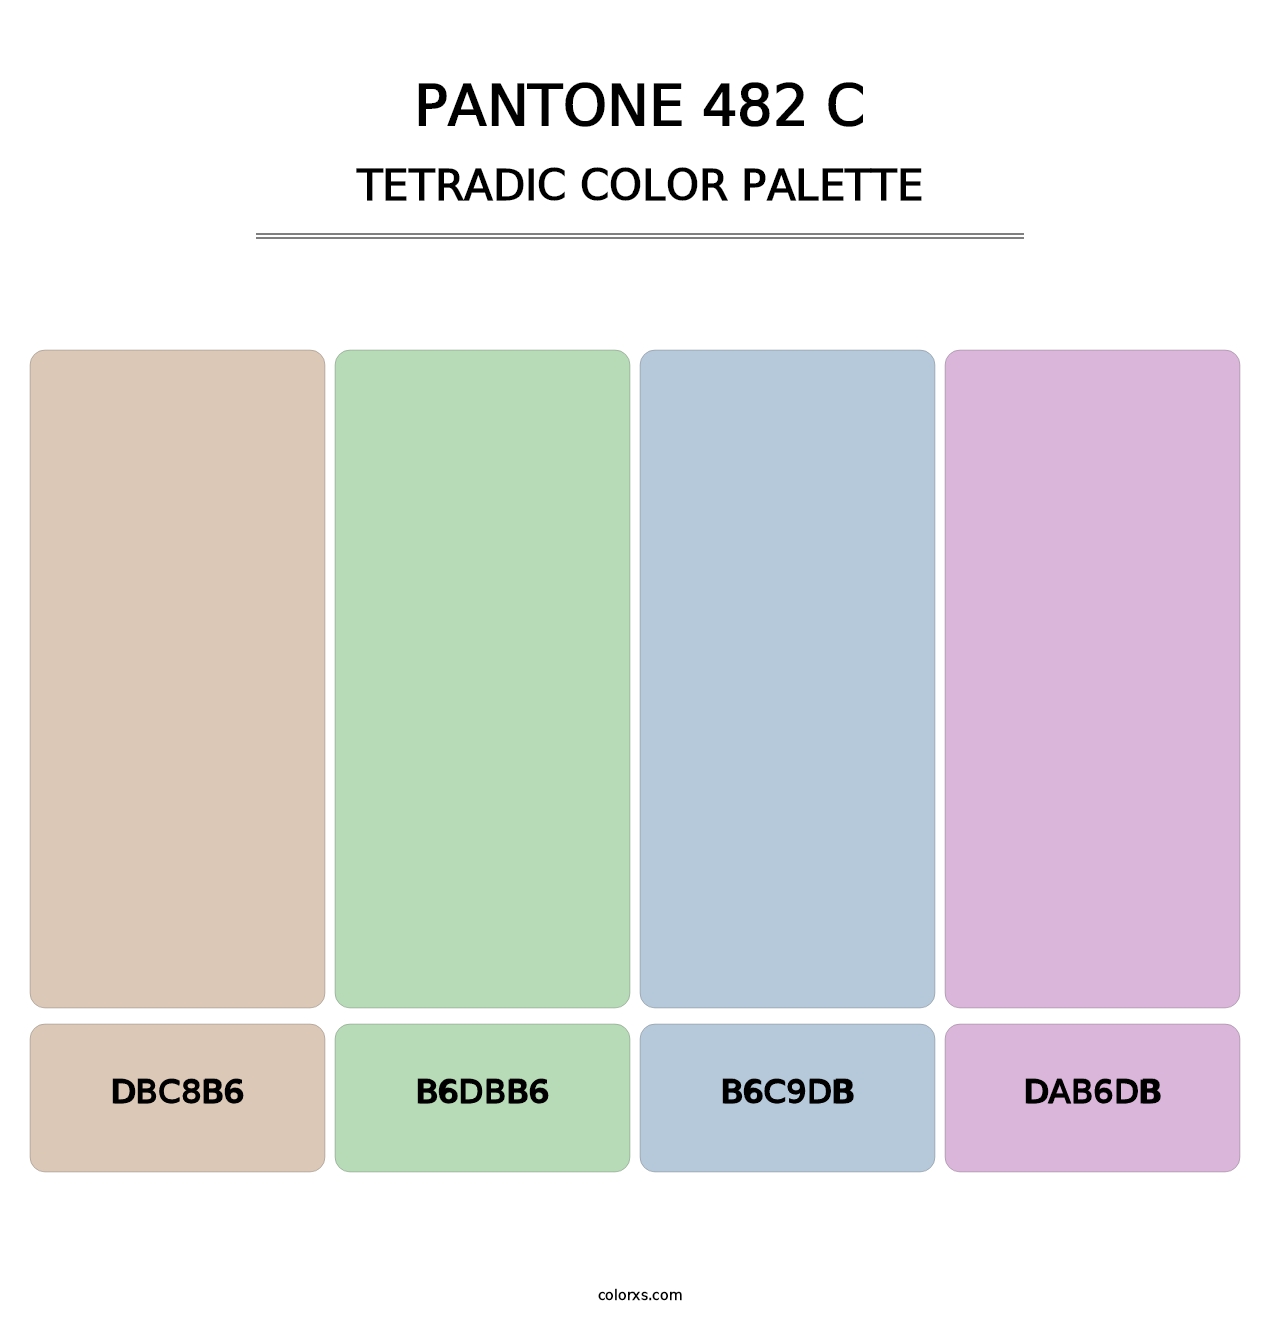 PANTONE 482 C - Tetradic Color Palette